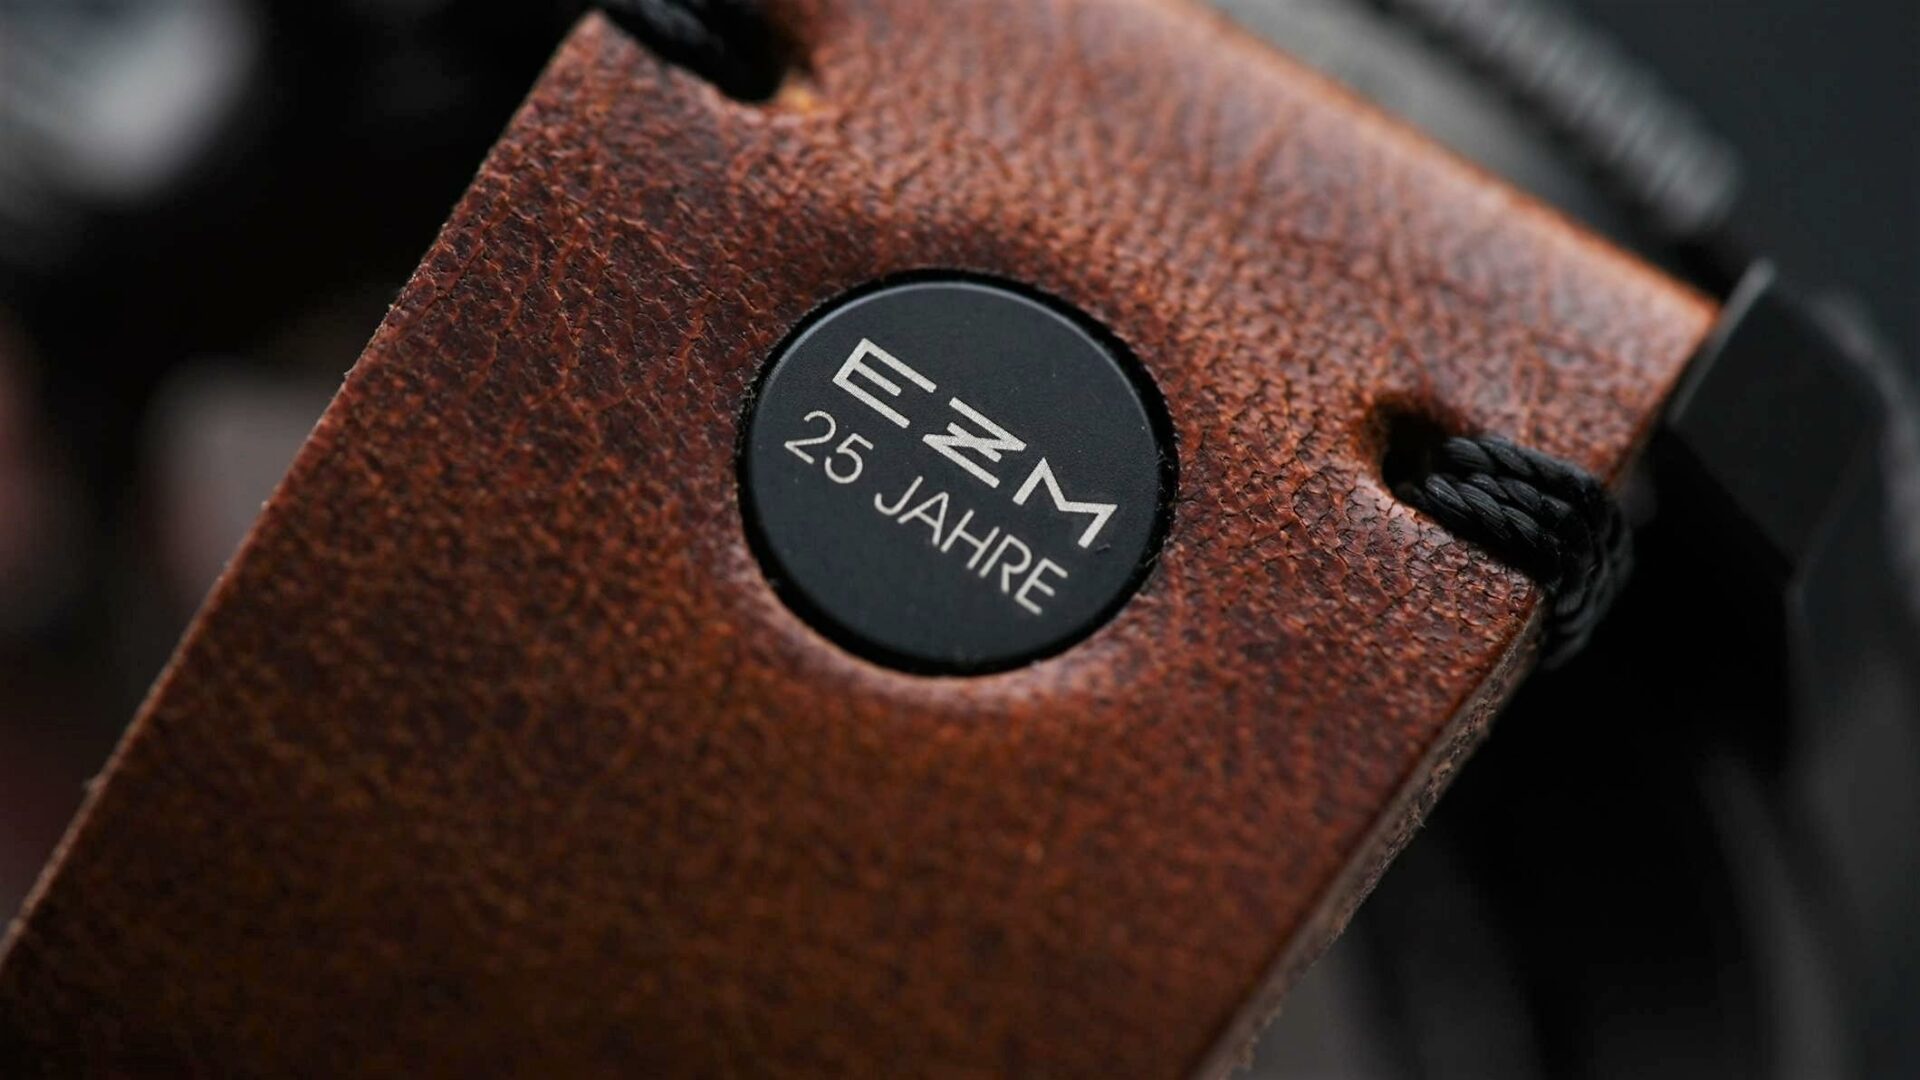 Sinn EZM 1.1S Limited Edition 500 closeup shot of 25th anniverssary button on strap "EZM 25 JAHRE".